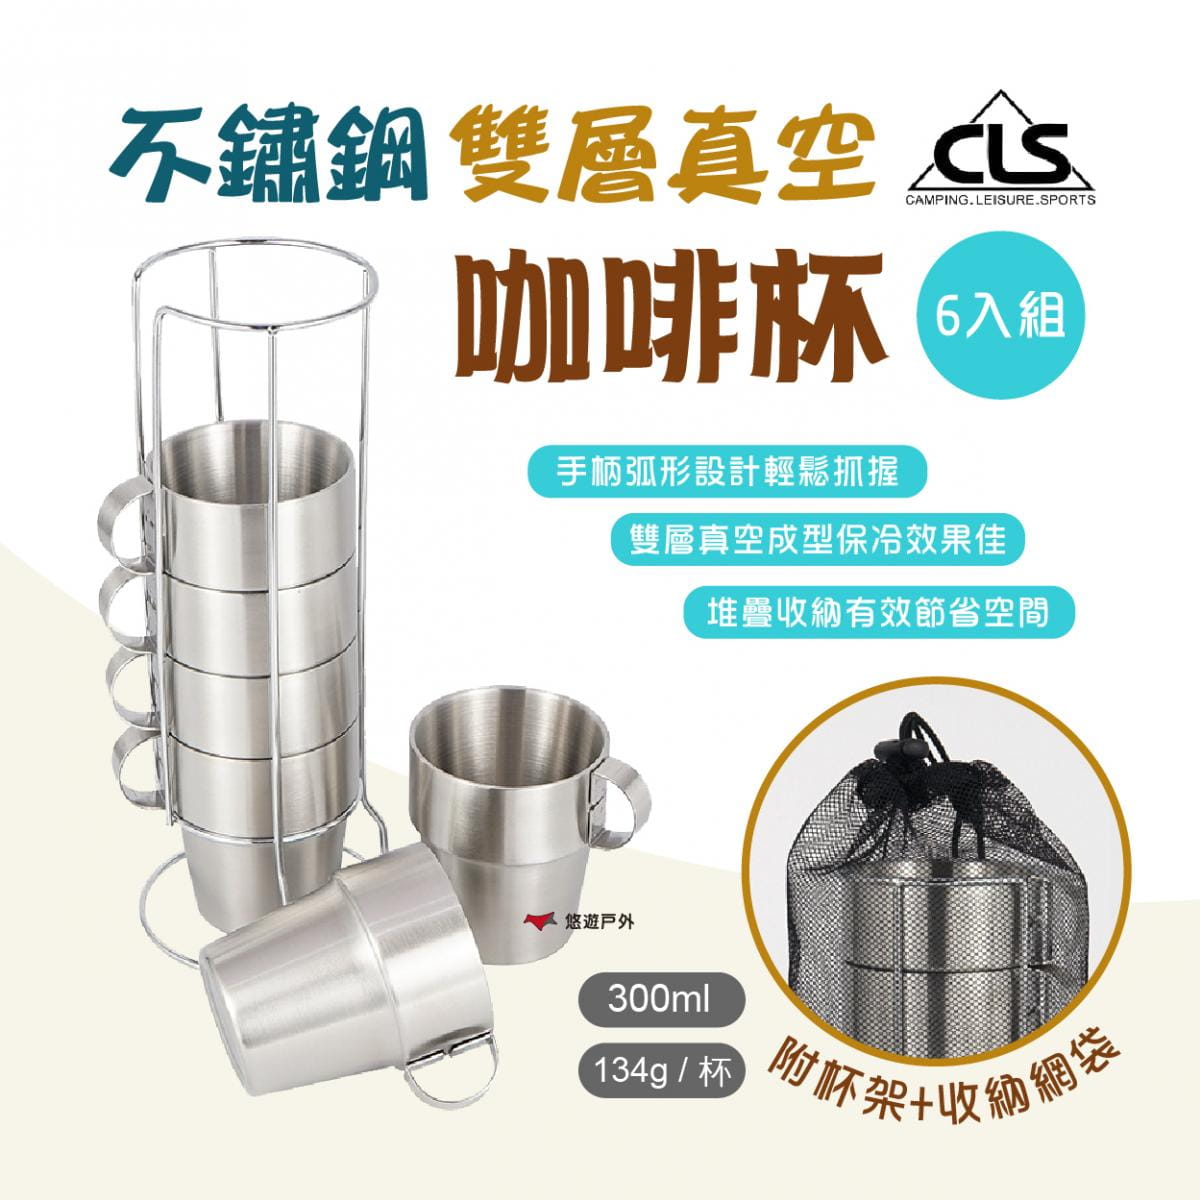 【CLS】304不鏽鋼雙層咖啡杯6入組 含杯架+收納袋 (悠遊戶外) 0